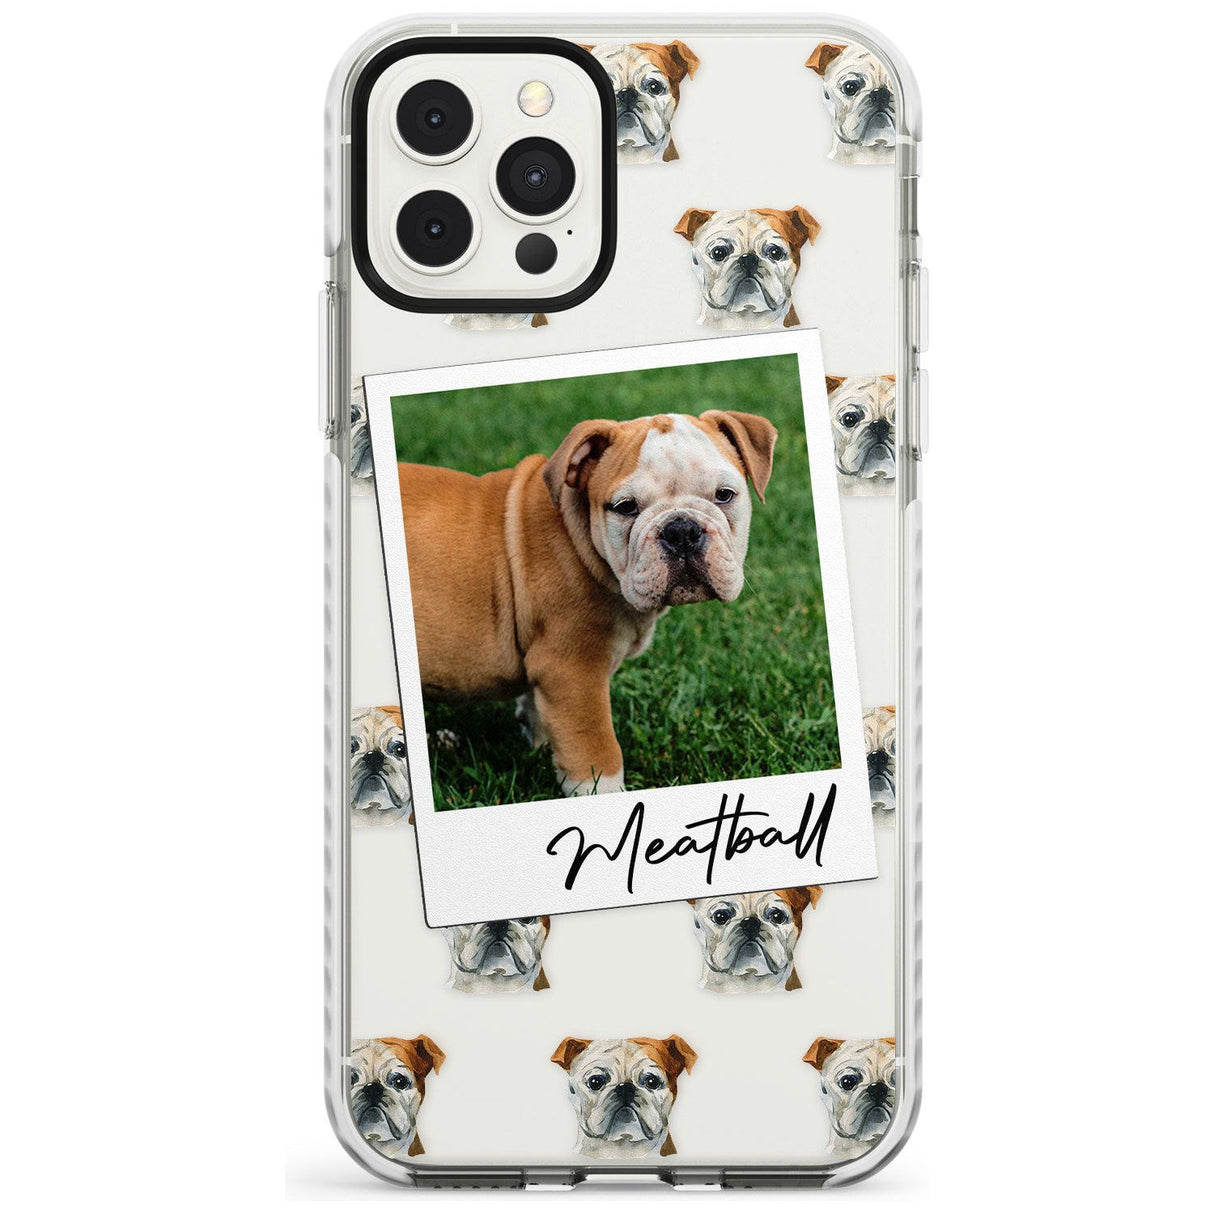 English Bulldog - Custom Dog Photo Slim TPU Phone Case for iPhone 11 Pro Max